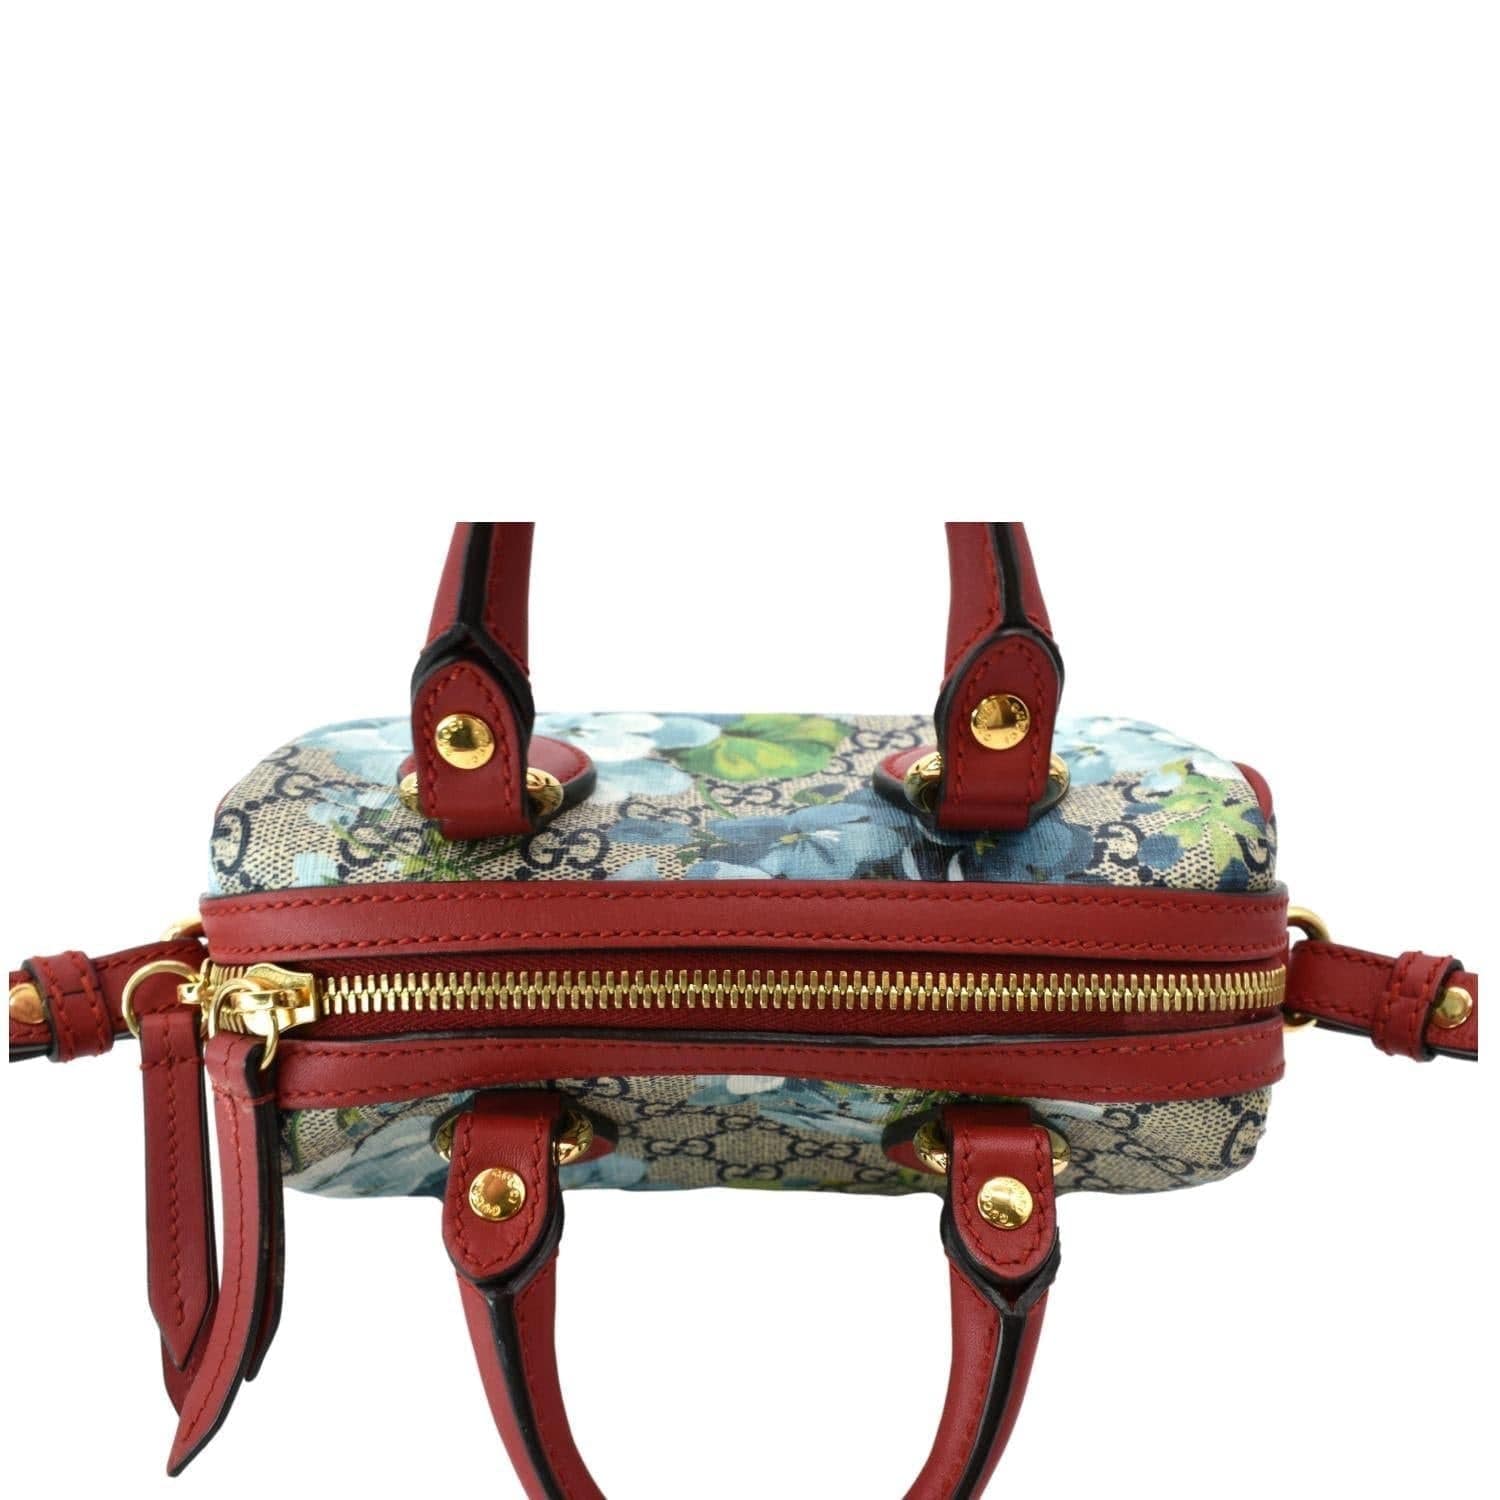 Mini Boston bag, Gucci - Designer Exchange